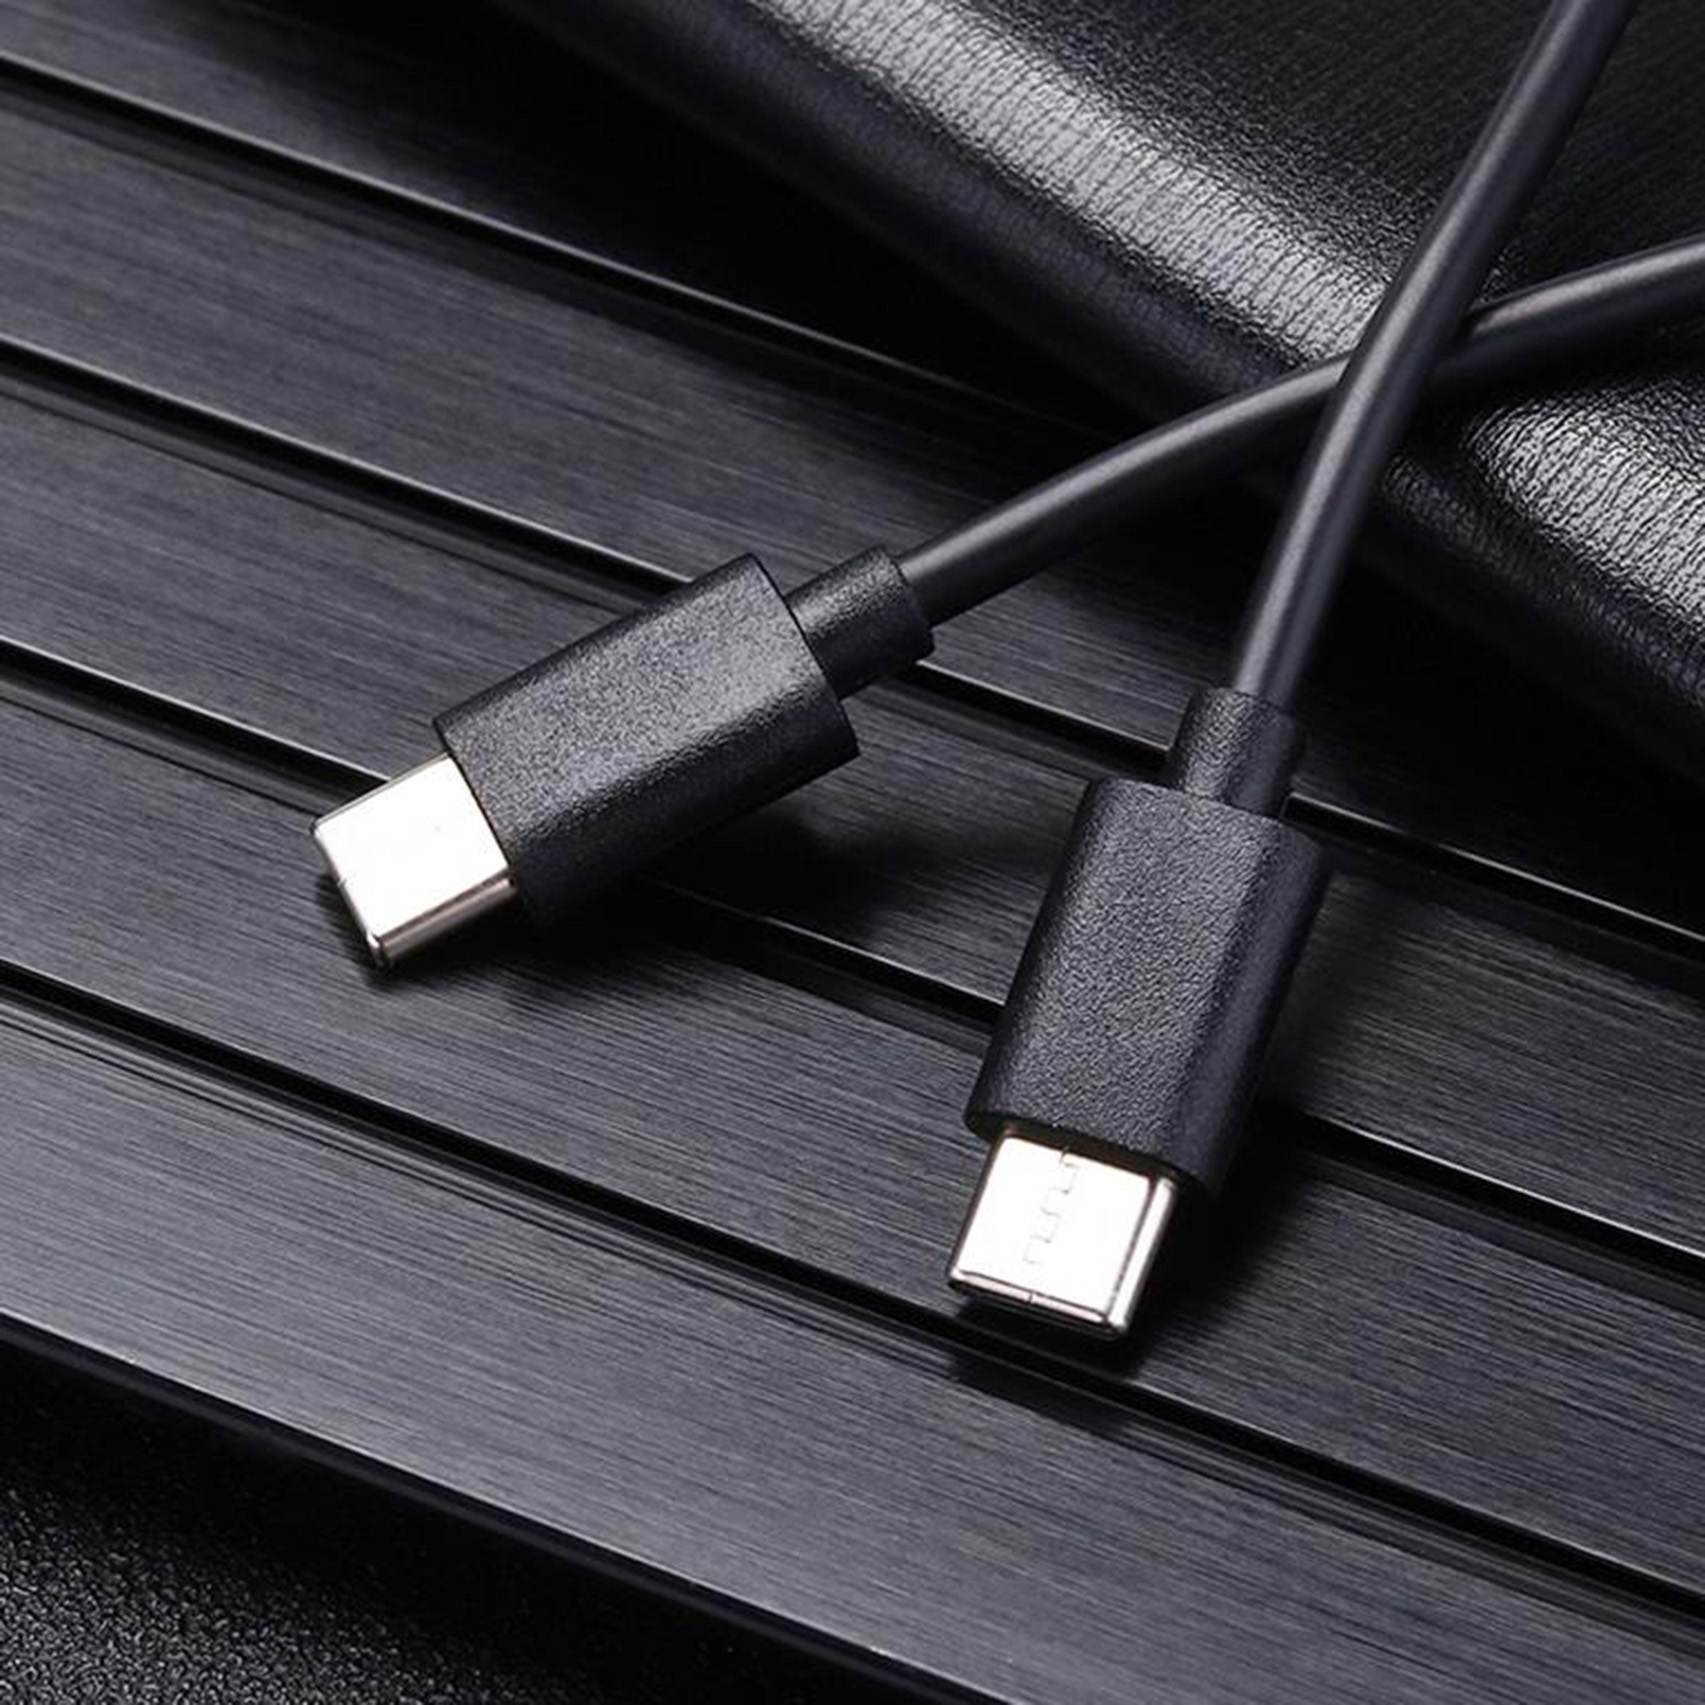 Samsung EP-DG977 Ladekabel Datenkabel  USB-C schwarz